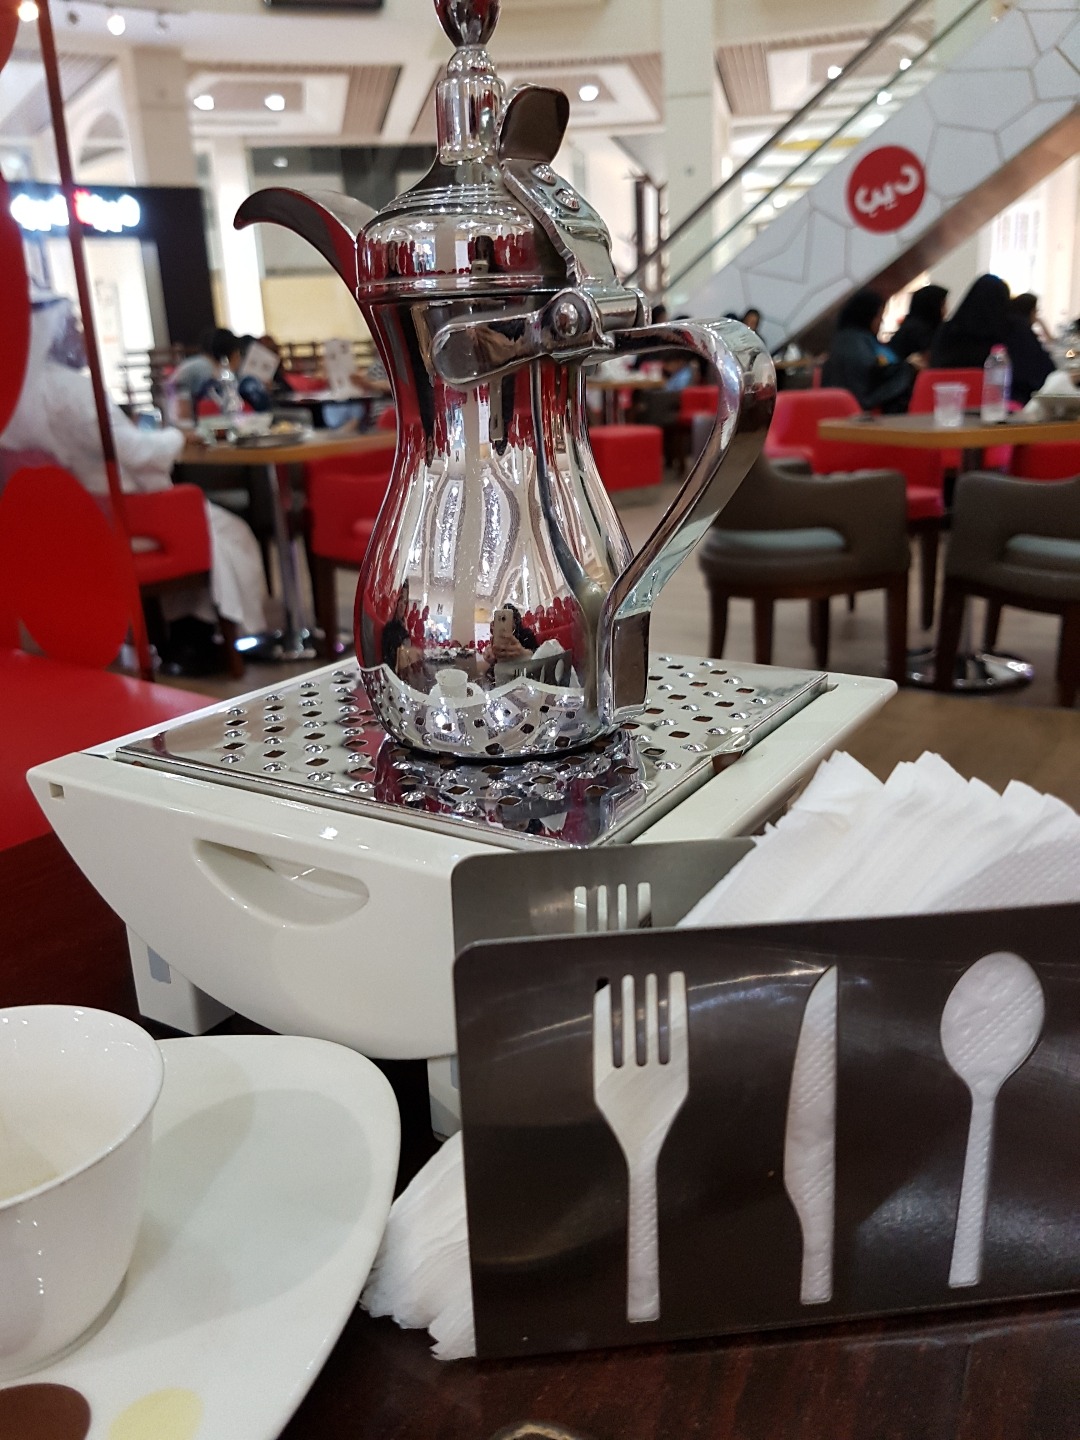 Arabic coffe nice one @ ديب ان ديب شوكليت كافيه - البحرين